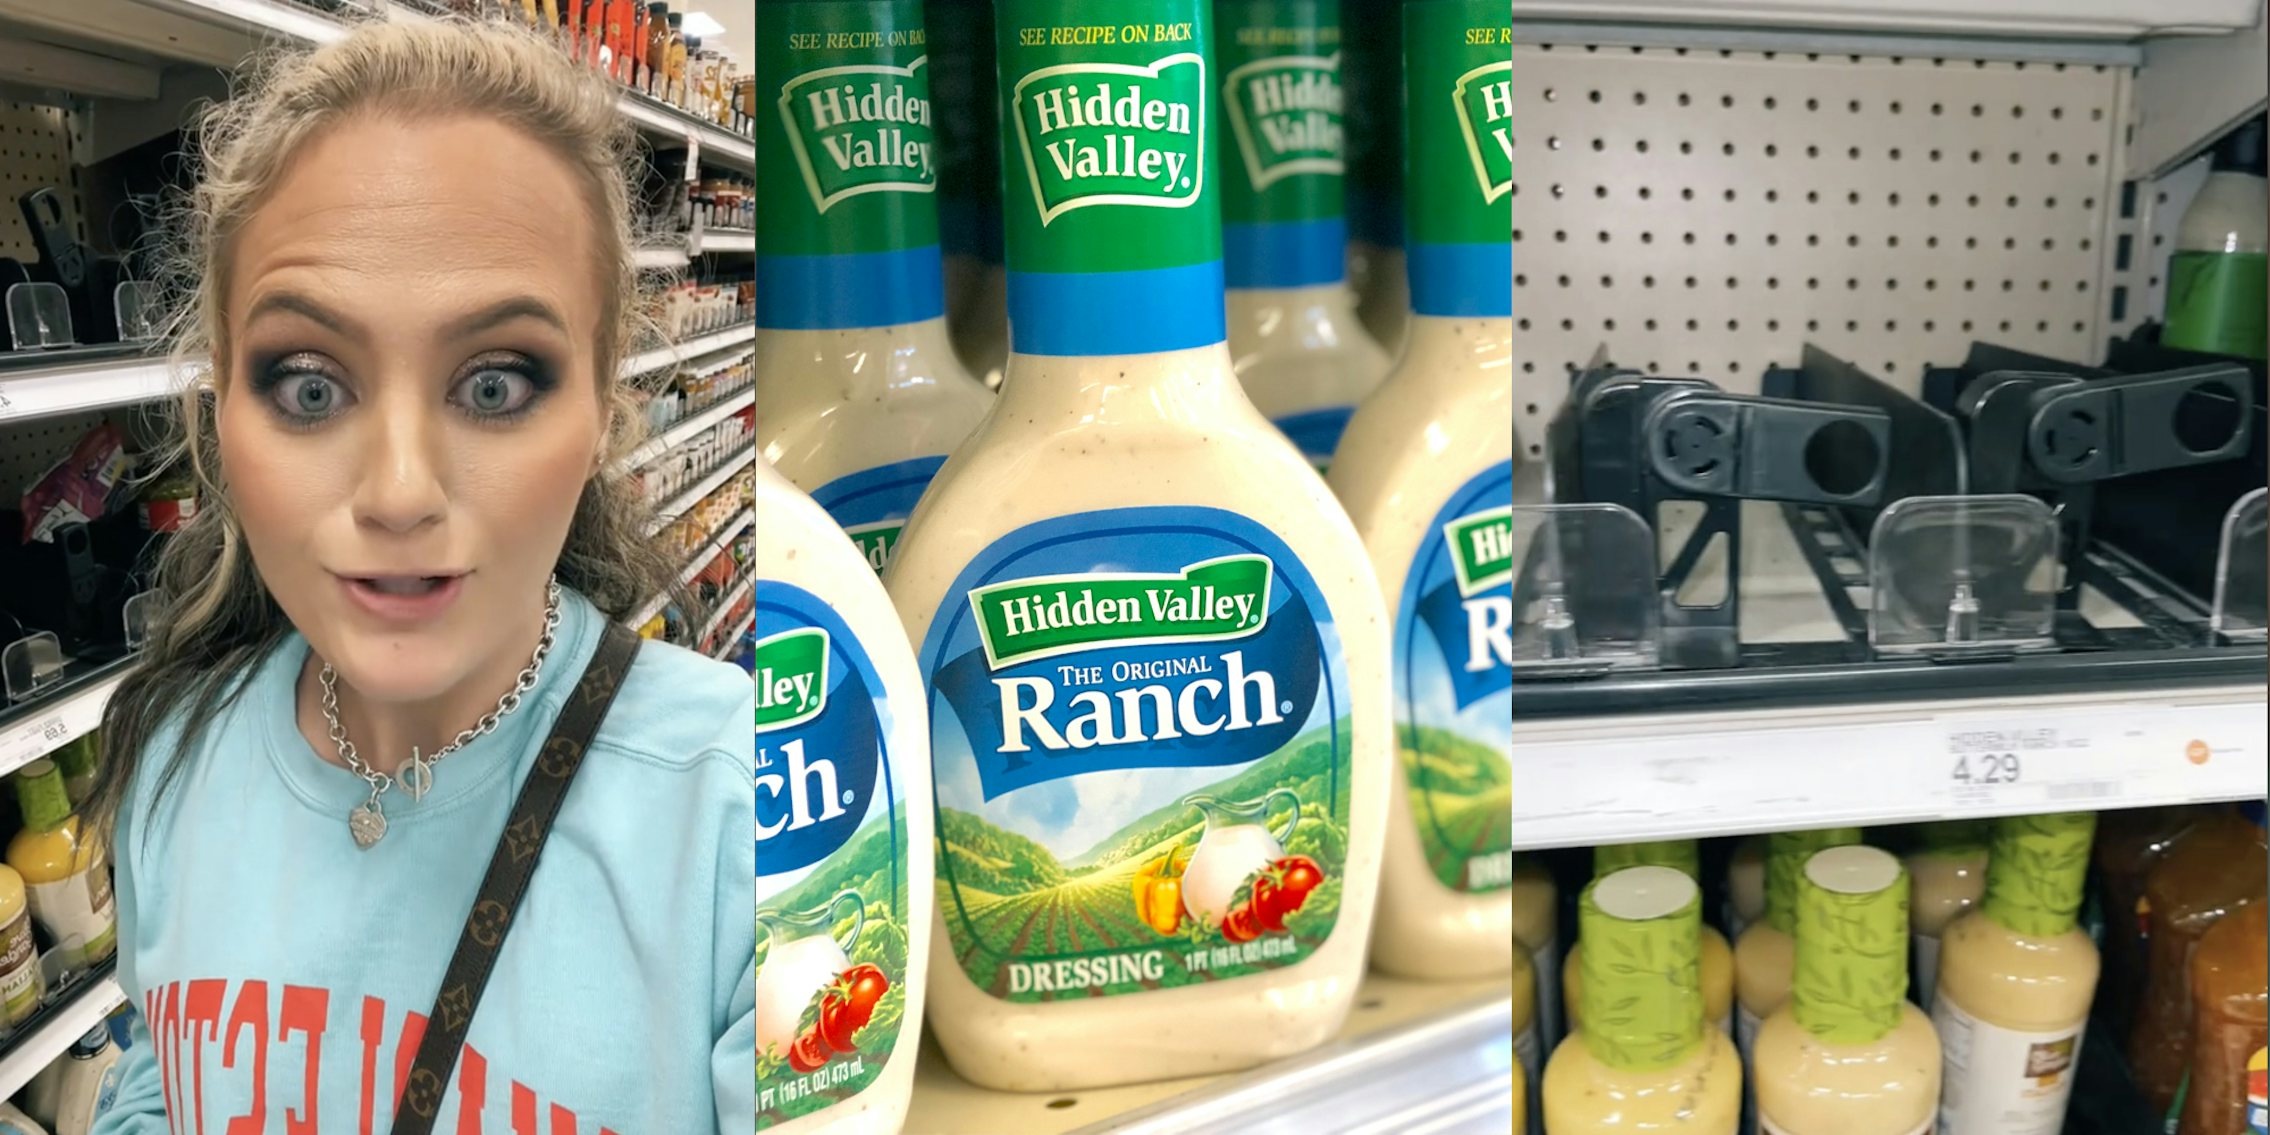 Woman looking shocked(l), Bottles of Hidden Valley Ranch on supermarket shelf(c),Empty shelves where Hidden Valley Ranch should be(r)